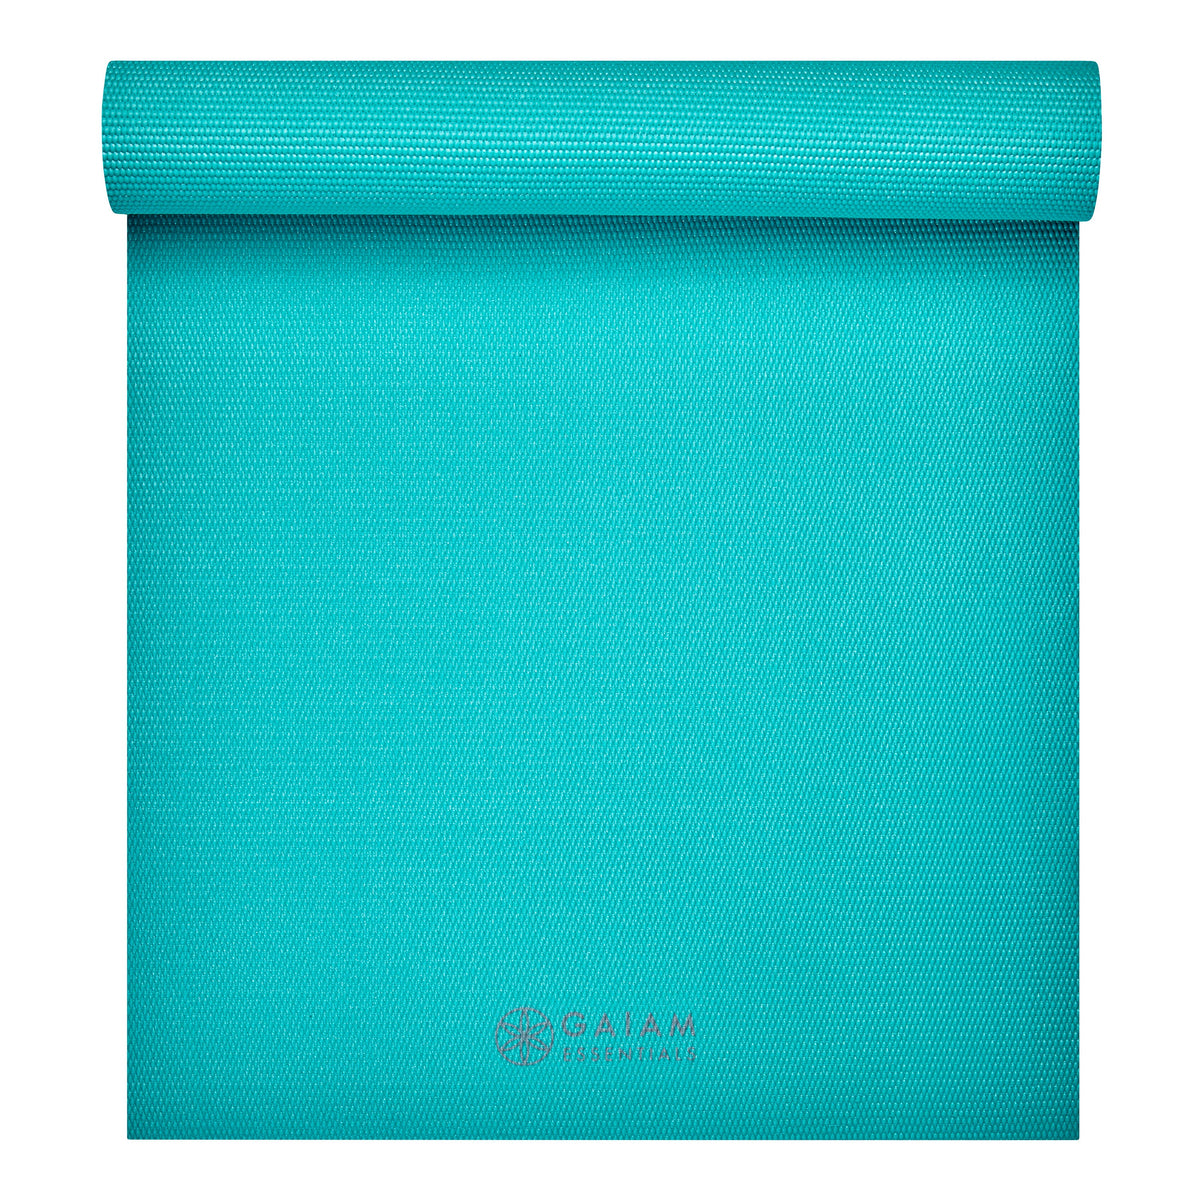 Hot Combo Yoga Mat - 2-in-1 (Mat + Towel) - Tribeca Sand